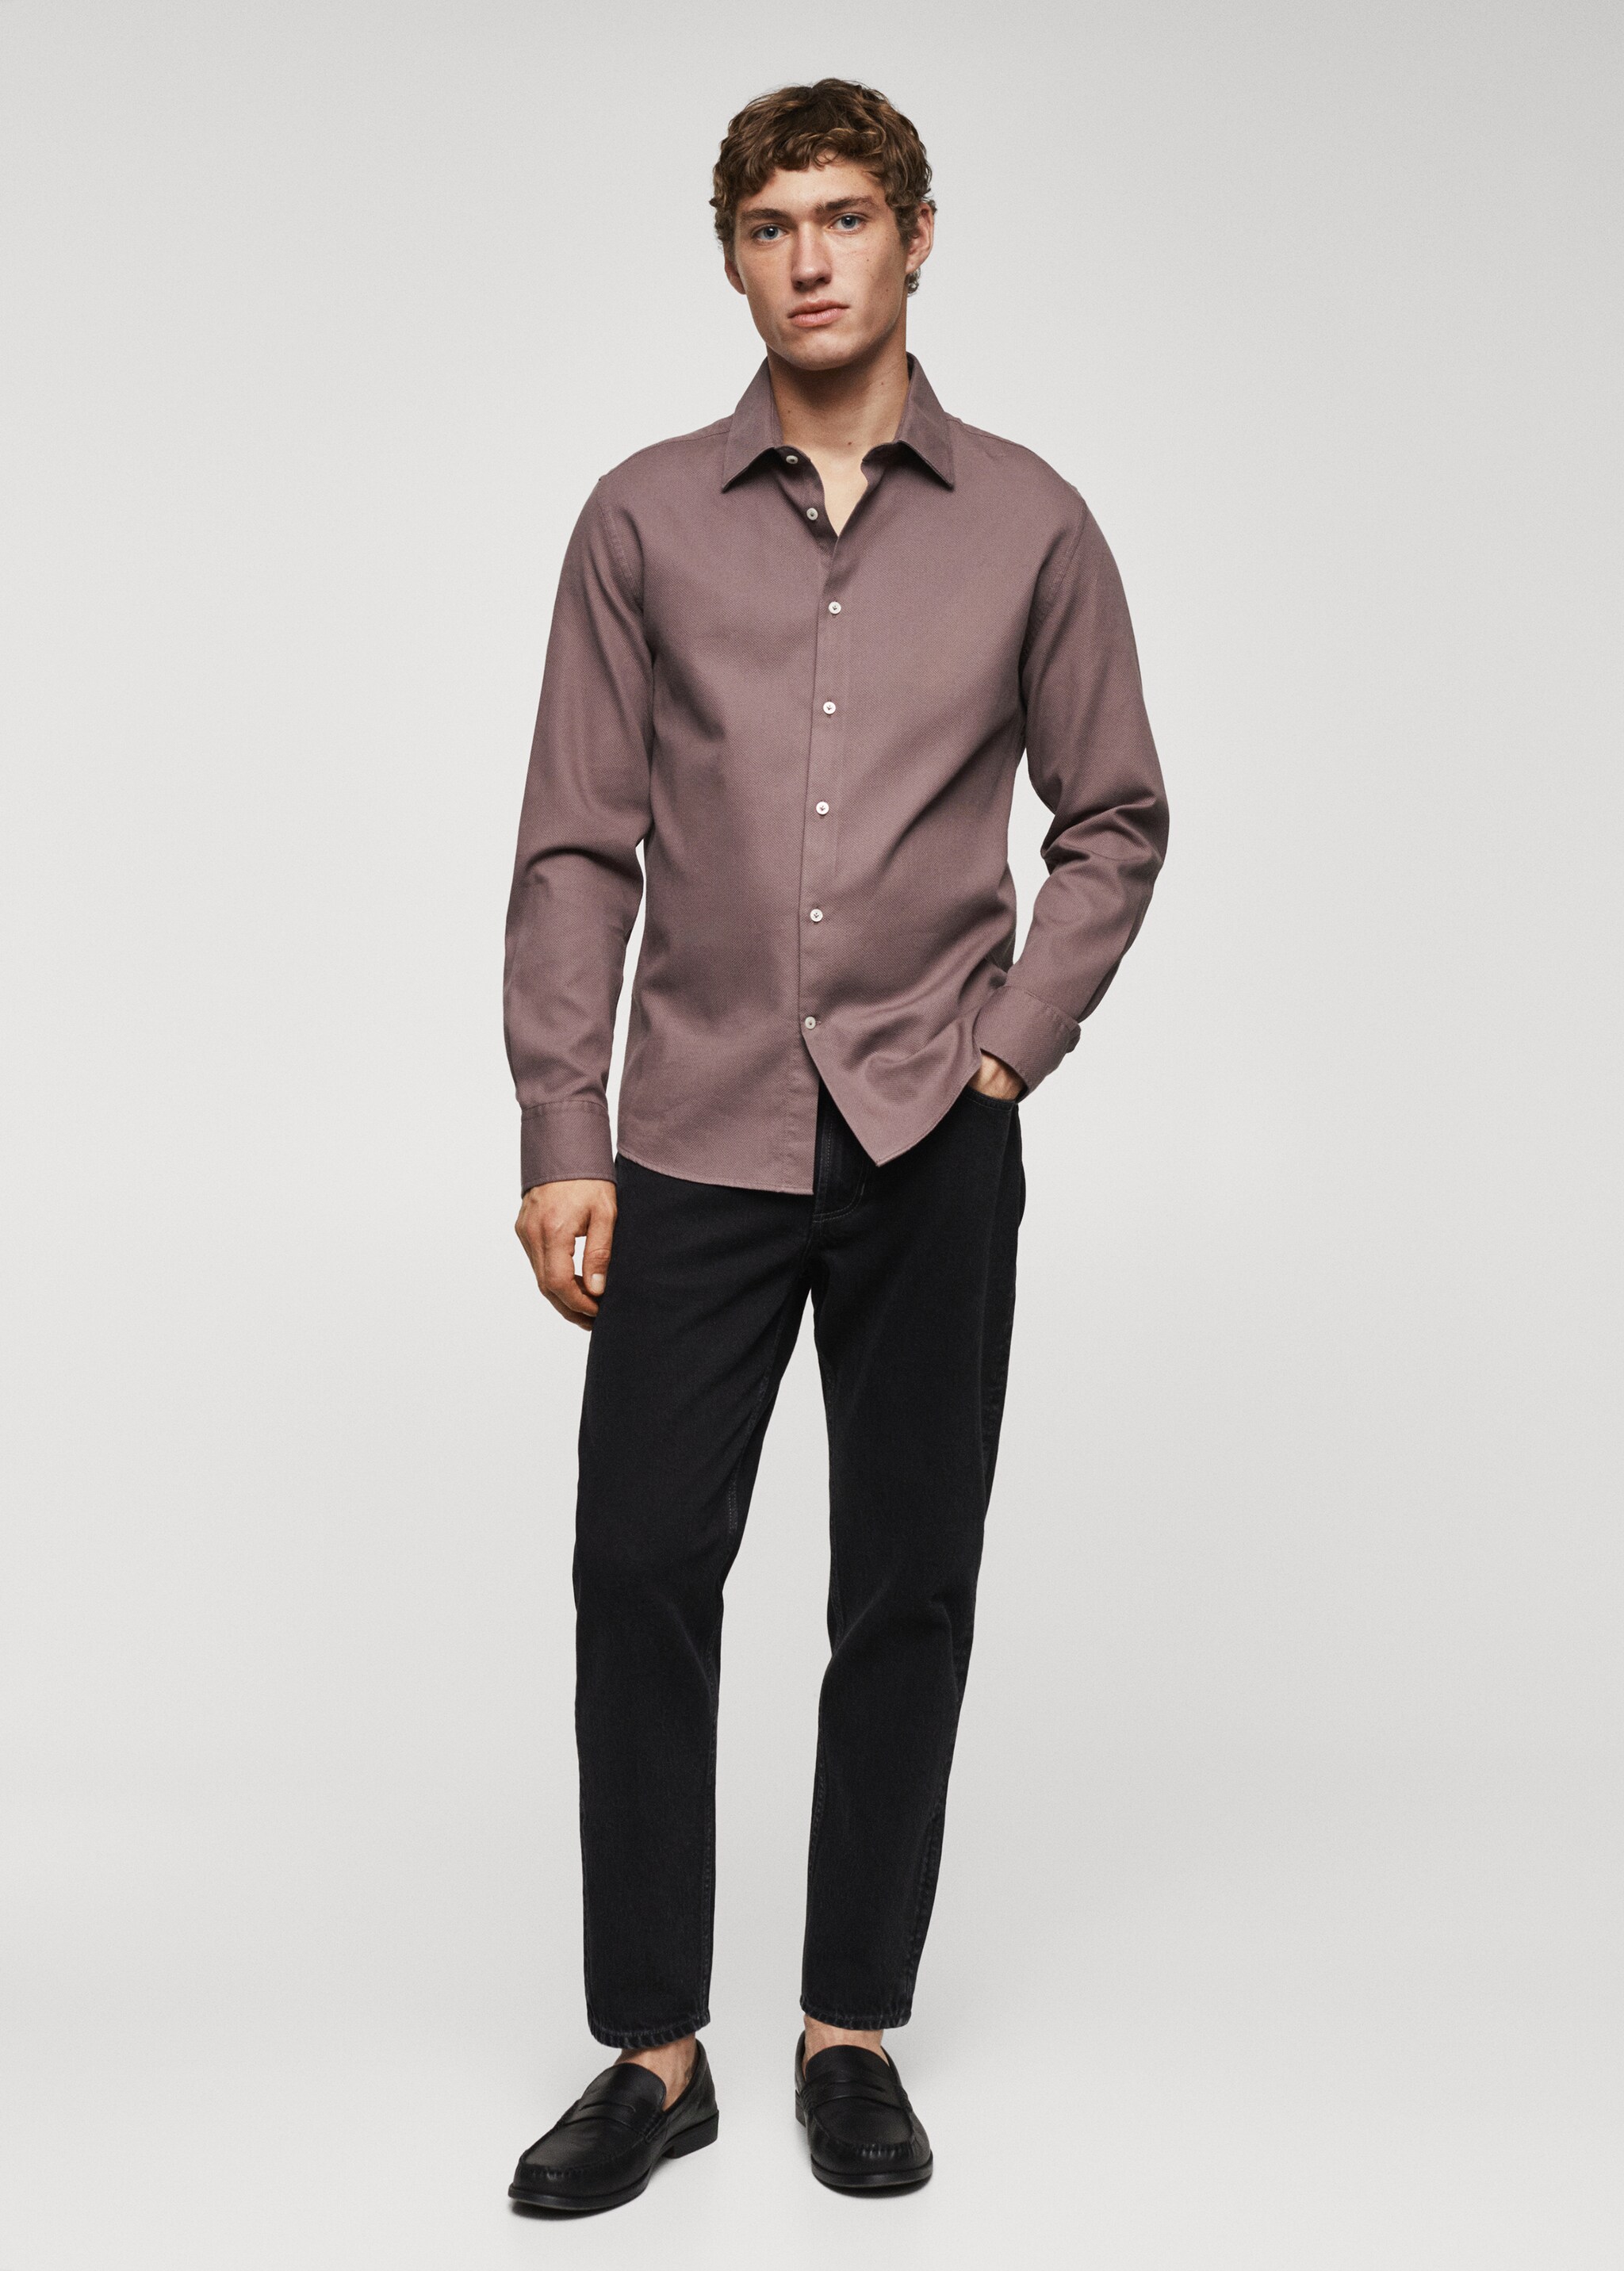 Slim-fit cotton structured shirt - General plane